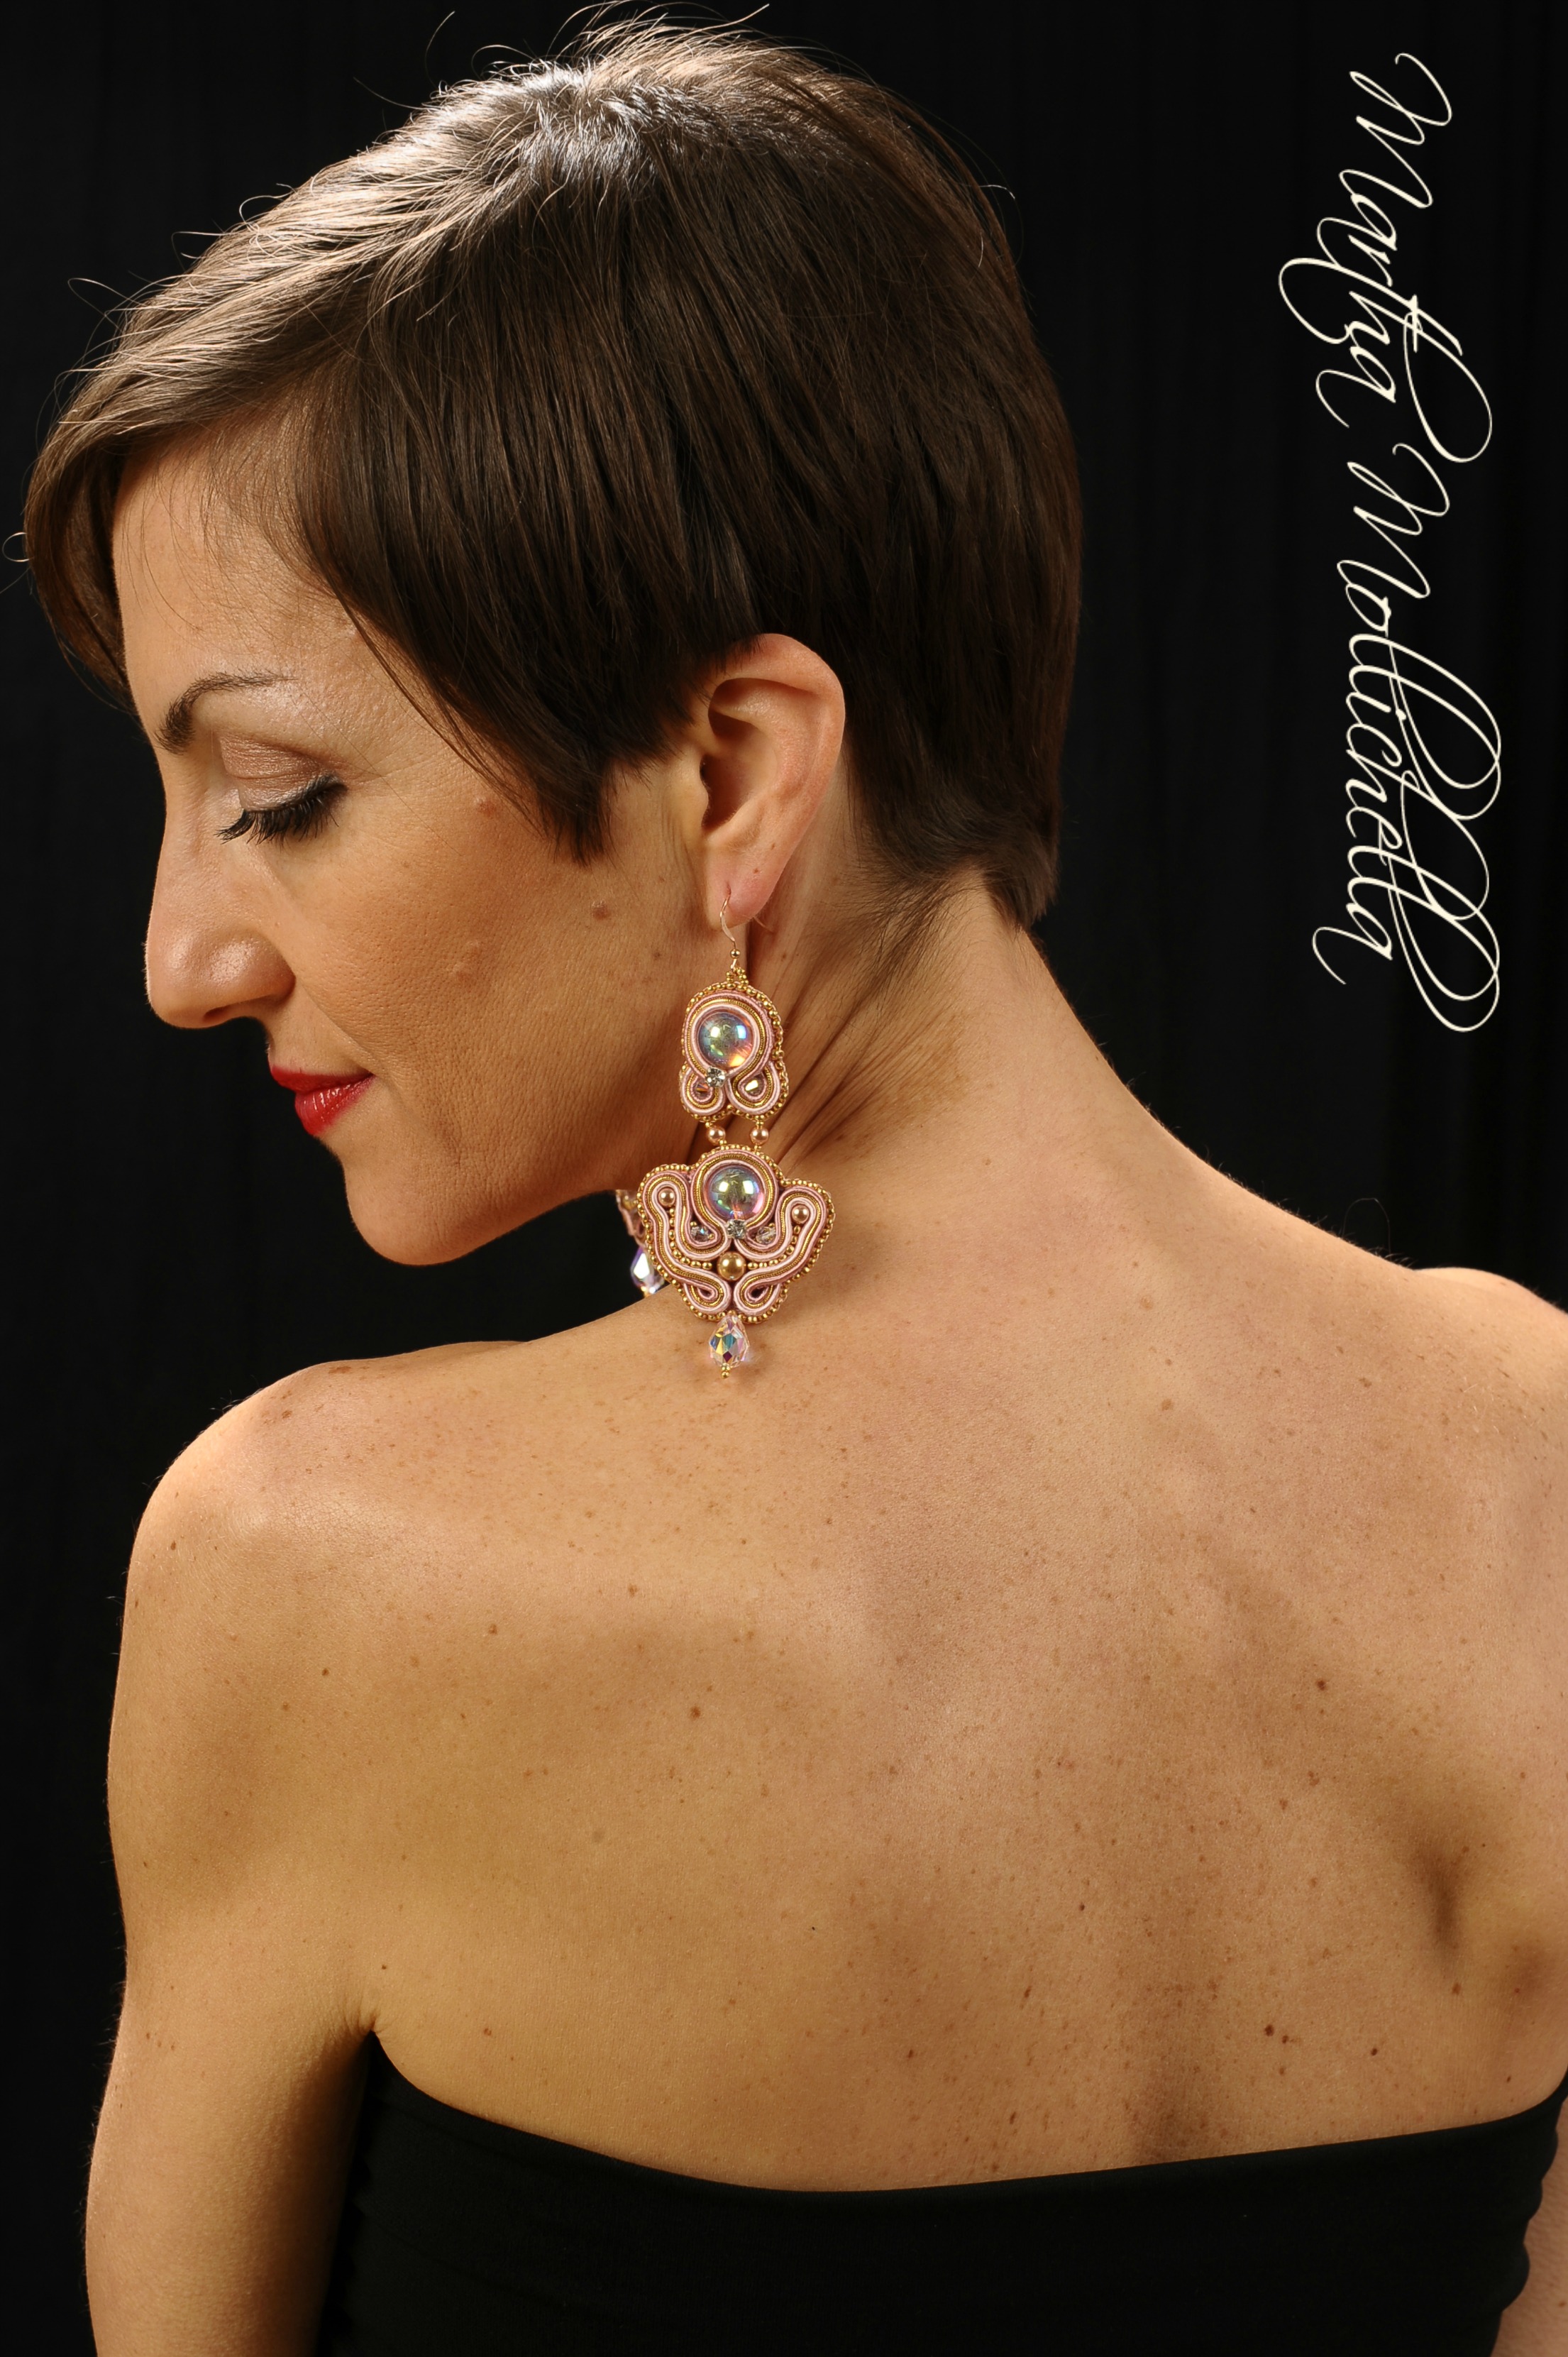 soutache earrings with swarovski crystal handmade in Italy by Martha Mollichella